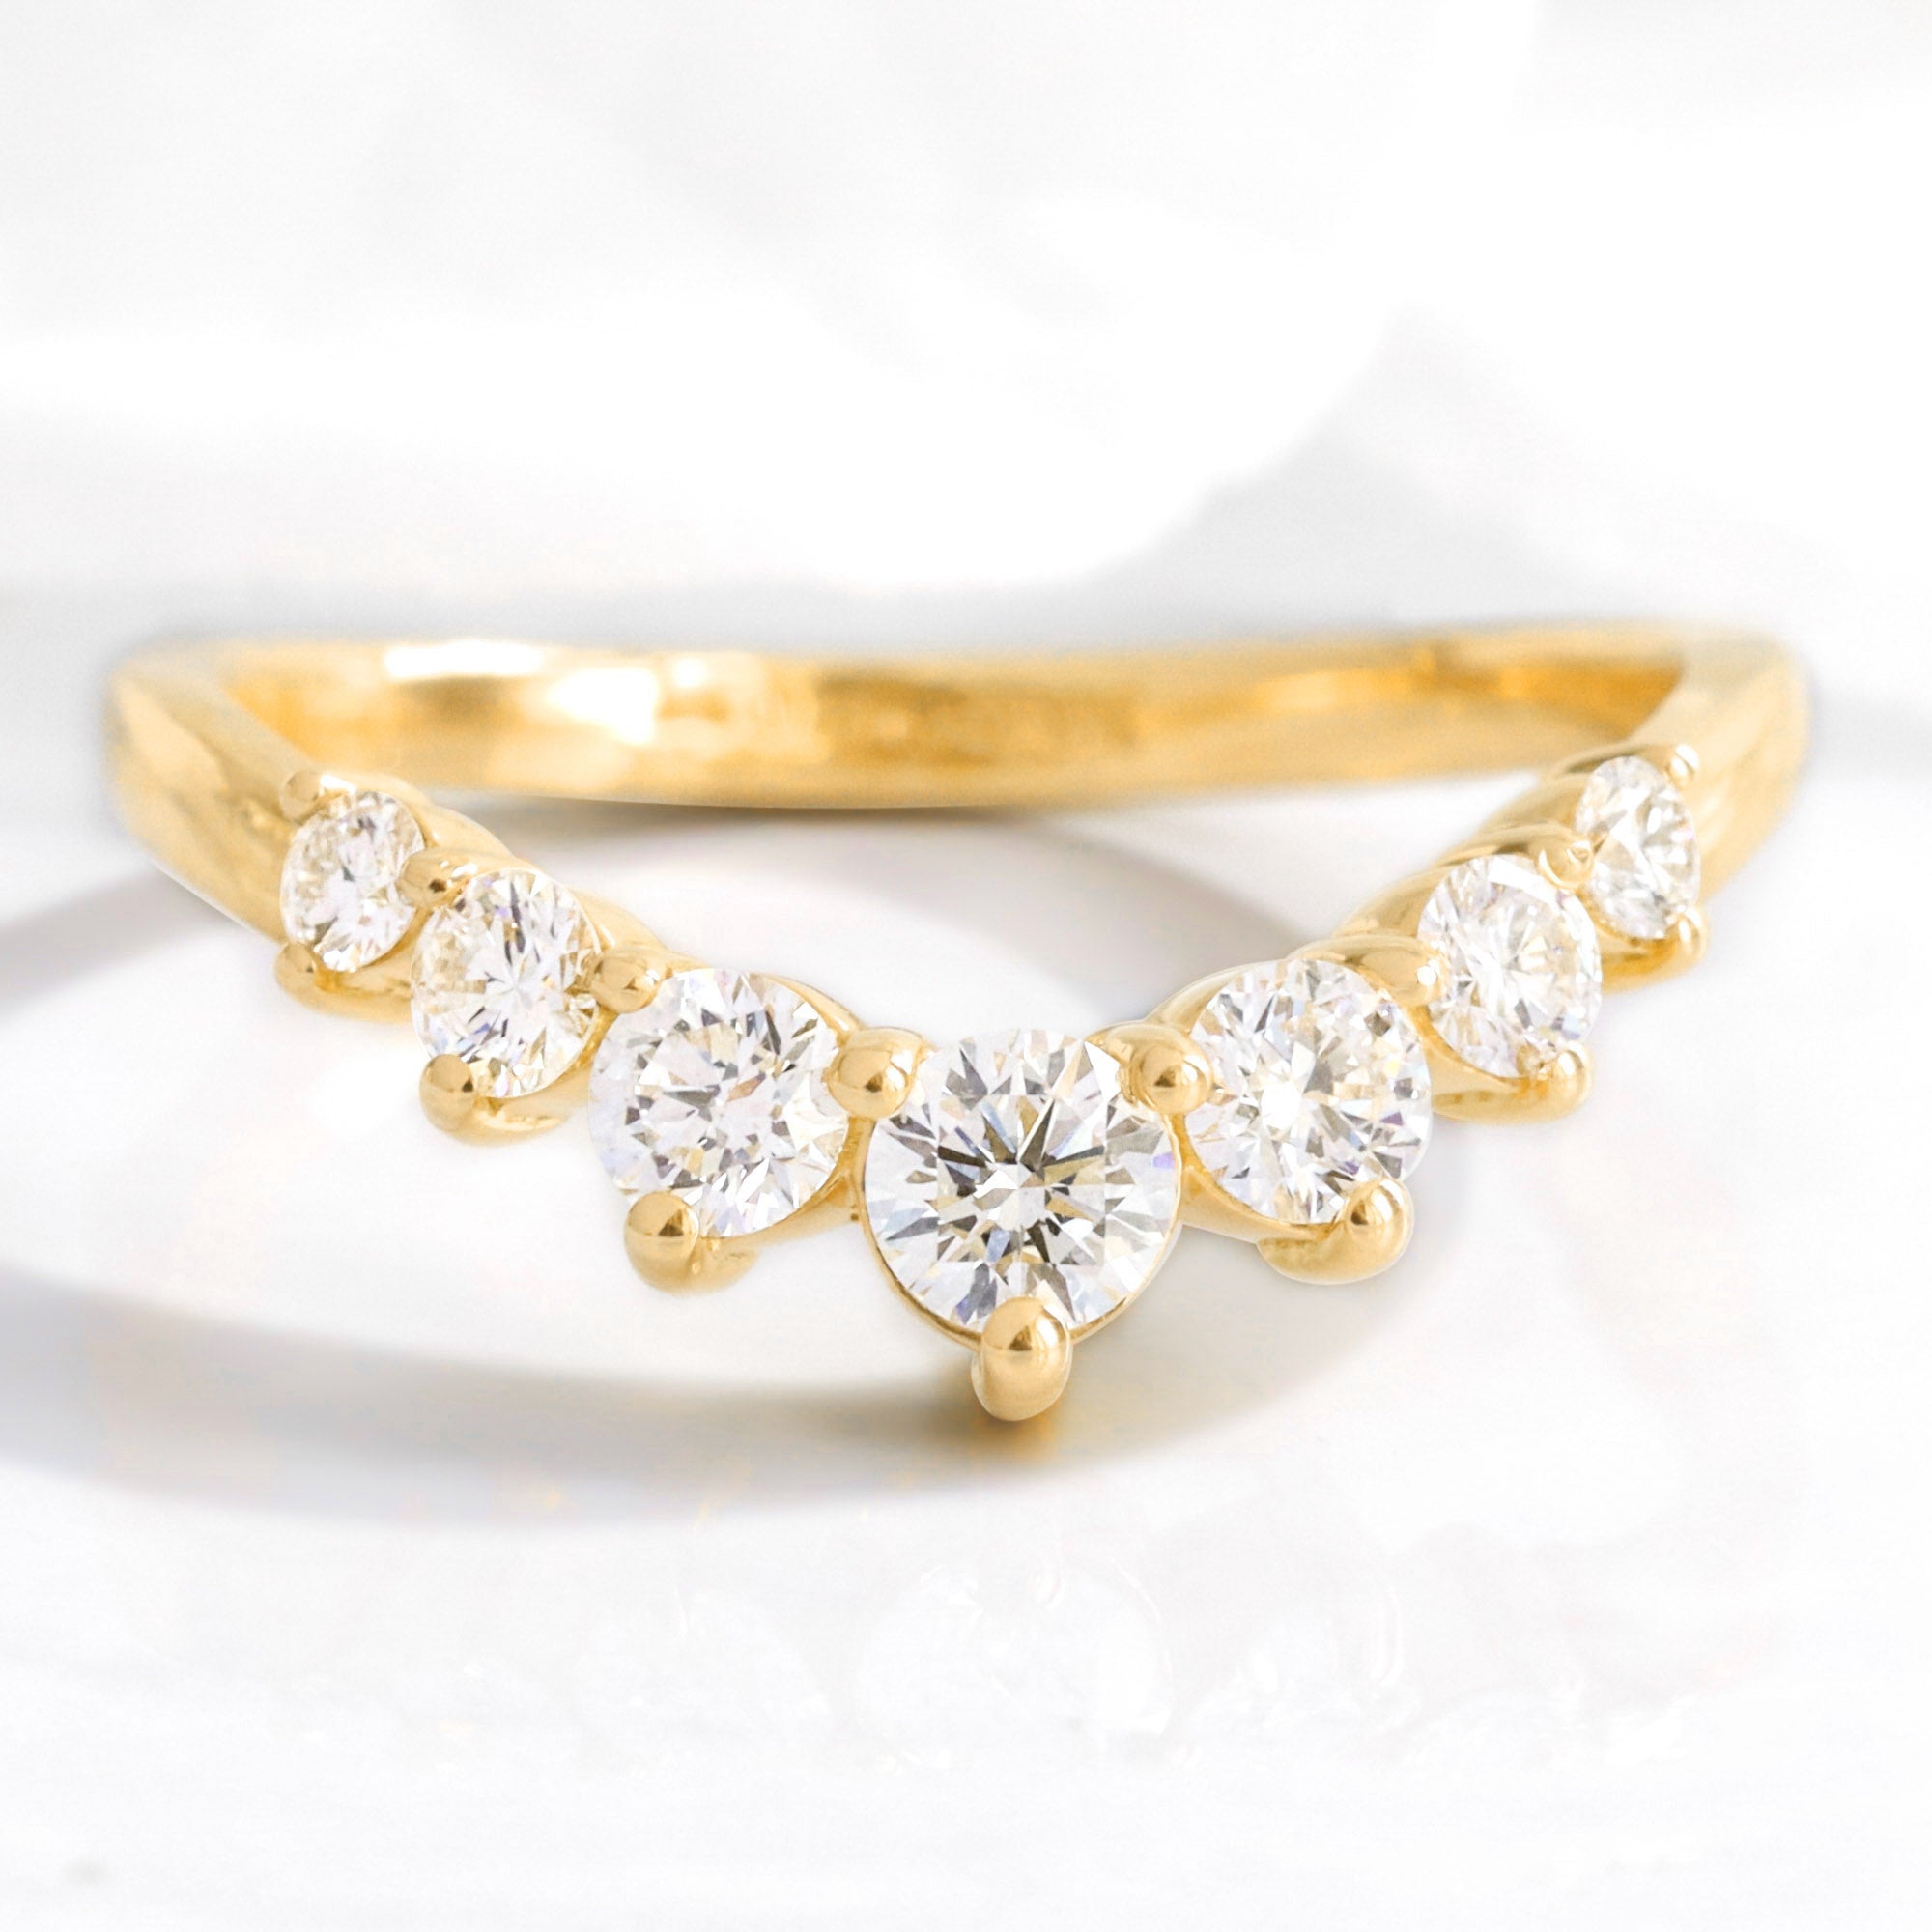 Large 7 diamond wedding ring yellow gold U shaped curved band la more design jewelry